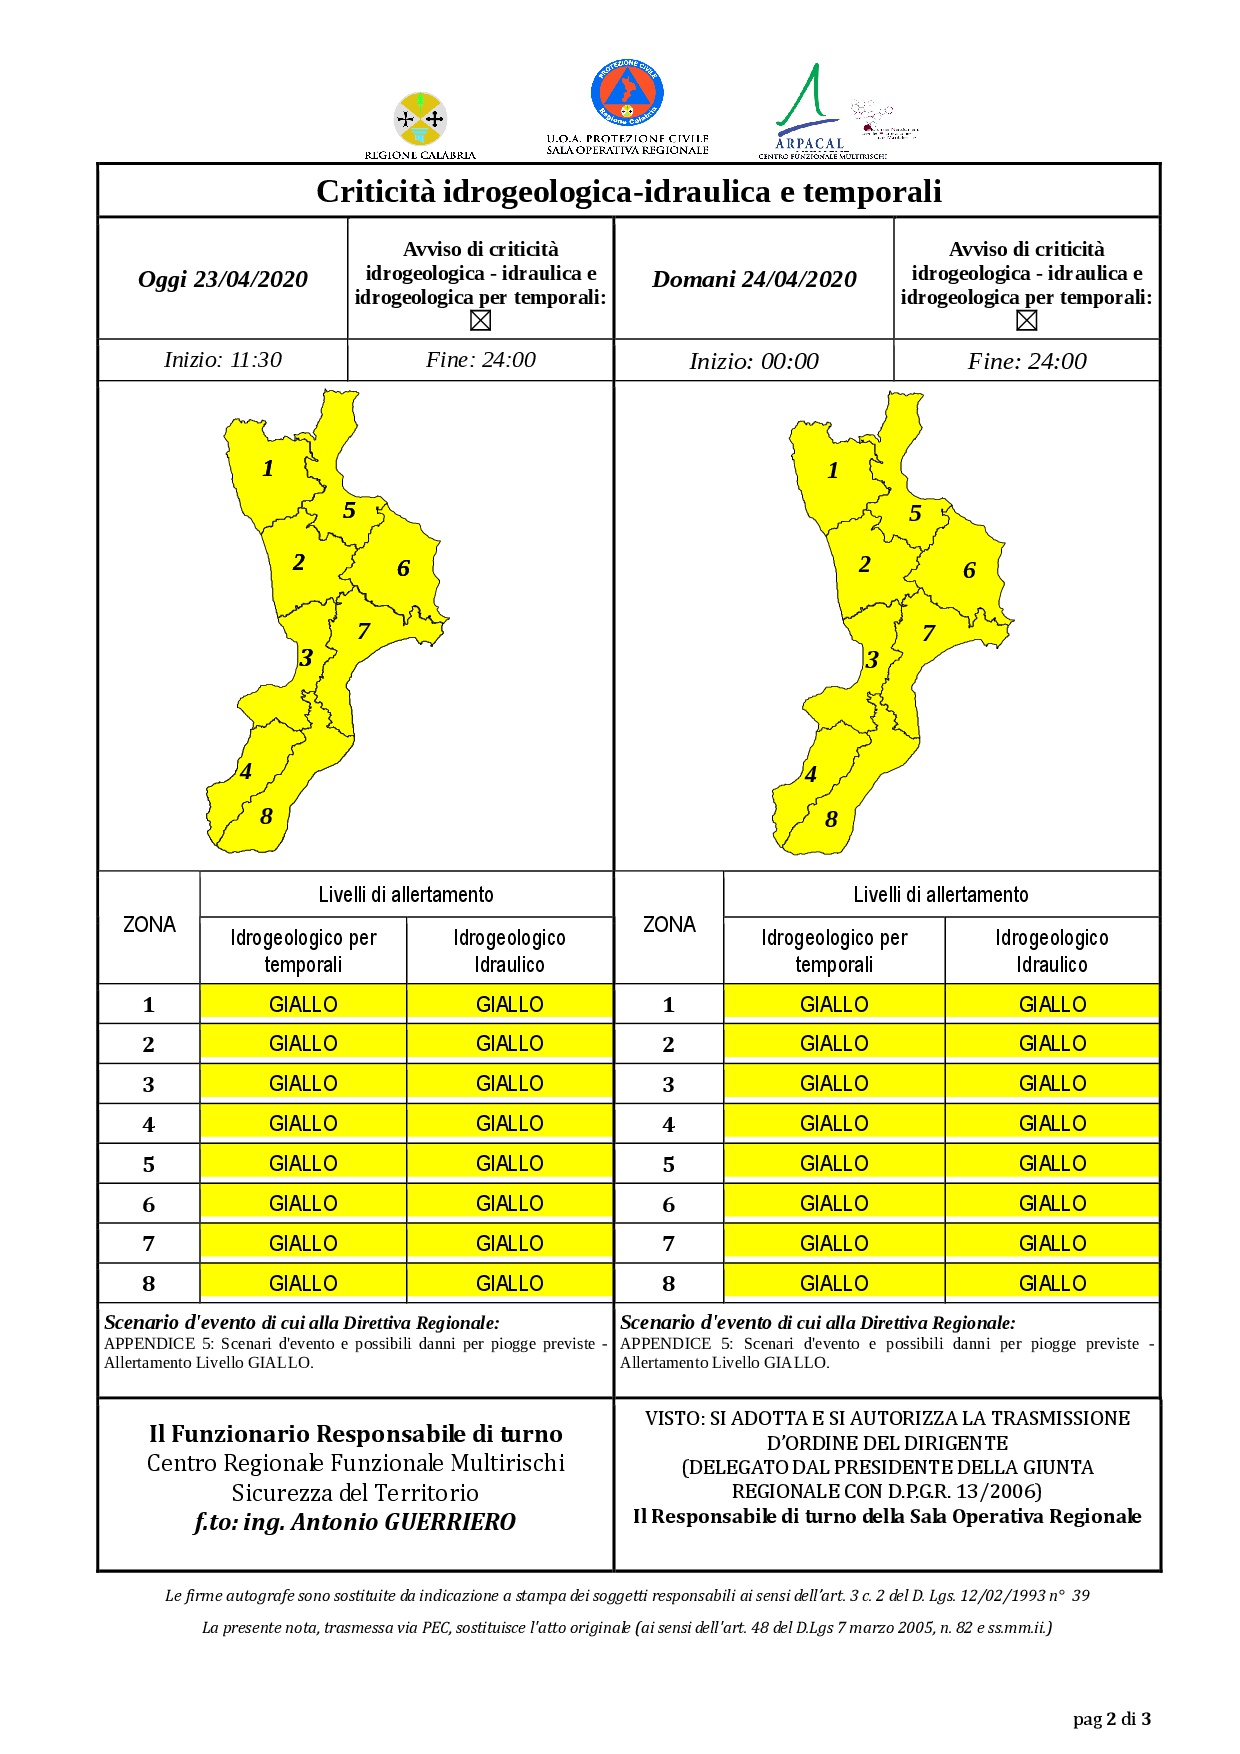 Criticità idrogeologica-idraulica e temporali in Calabria 23-04-2020